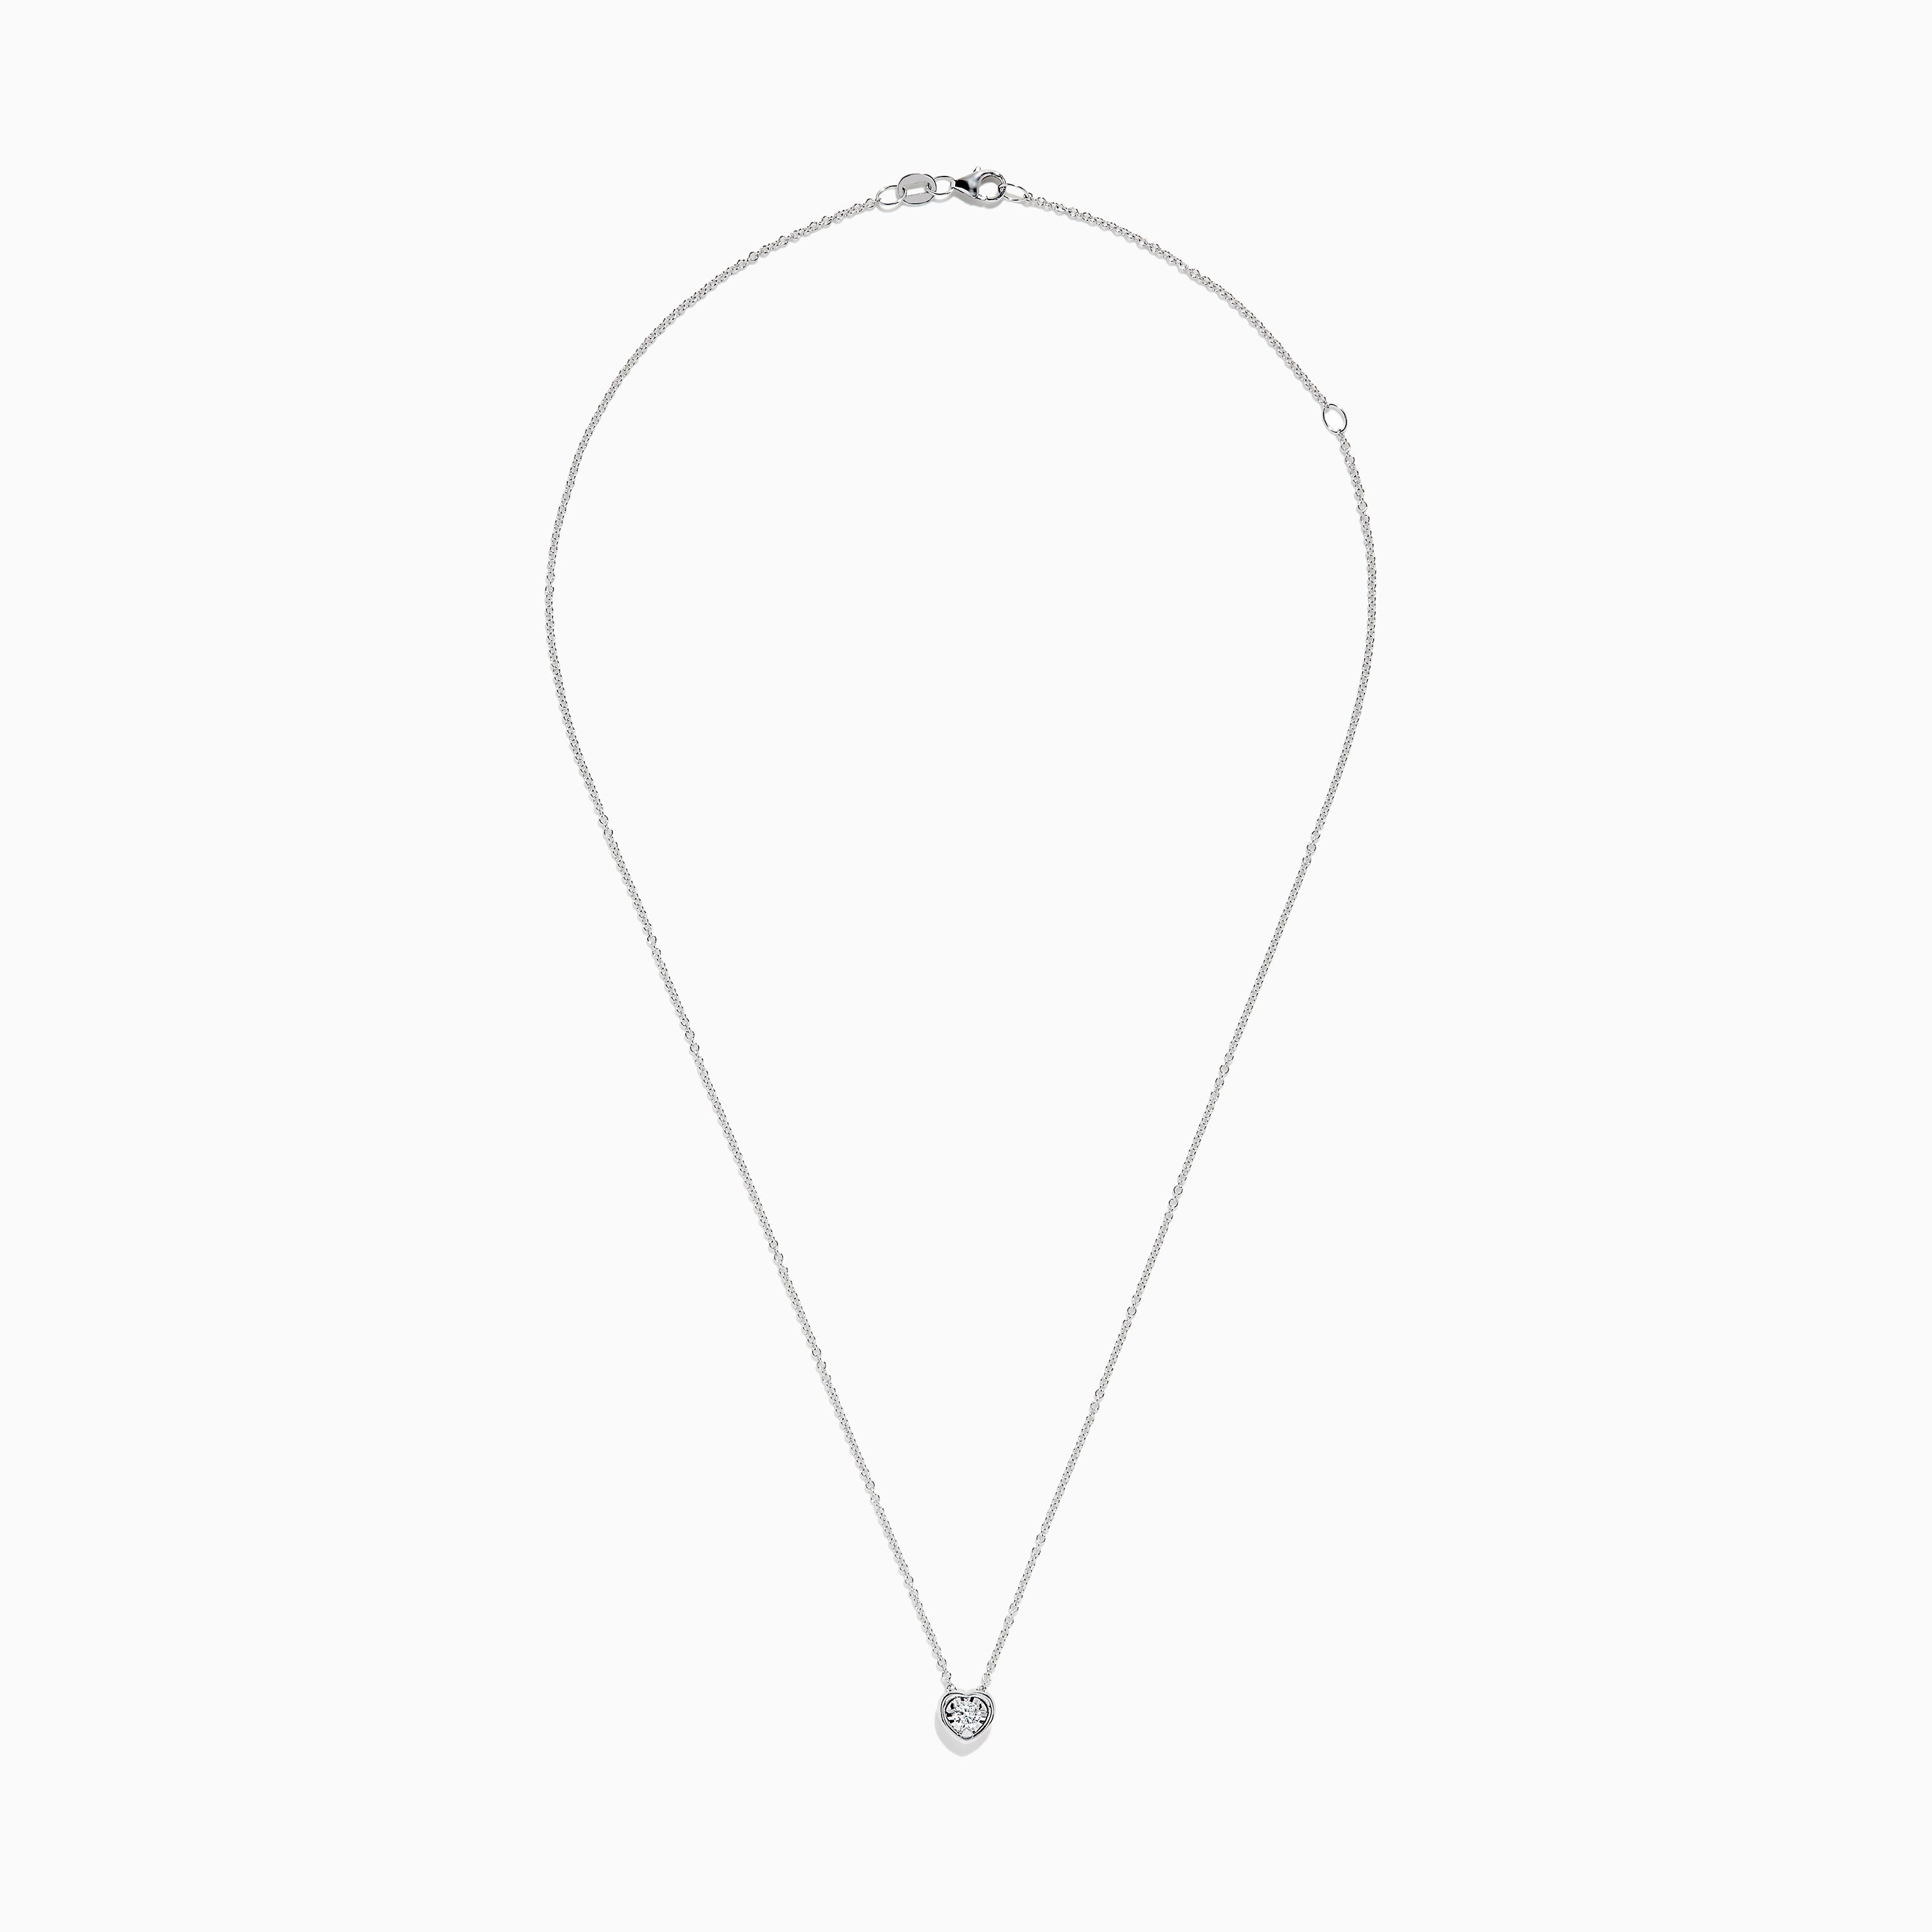 Effy 925 Sterling Silver Diamond Heart Necklace, 0.15 TCW